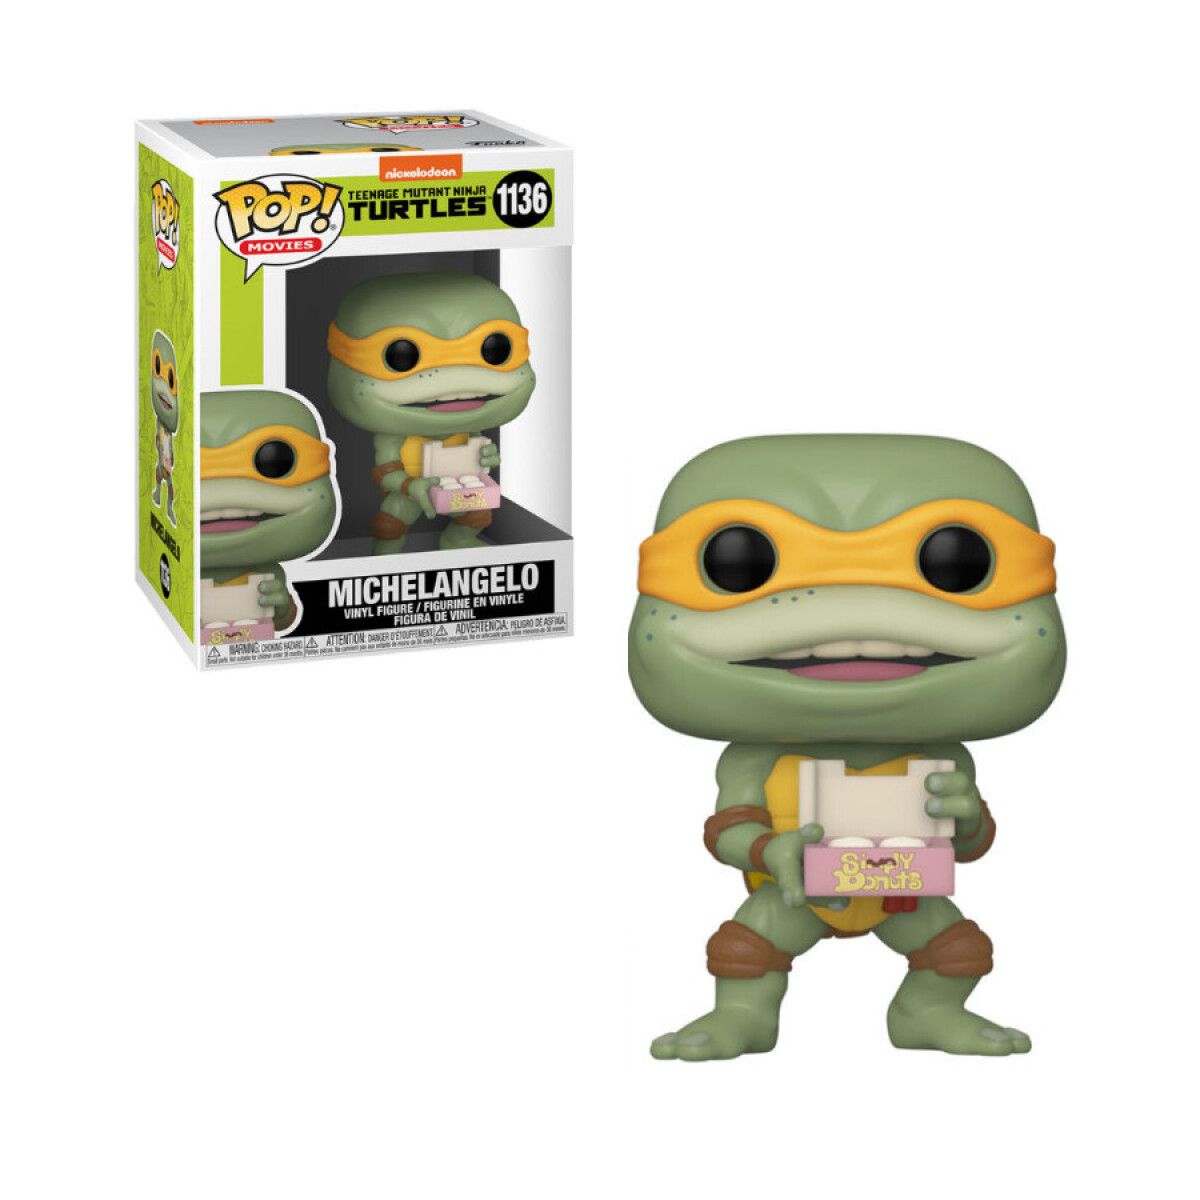 Michelangelo • Teenage Mutant Ninja Turtles 2 - 1136 